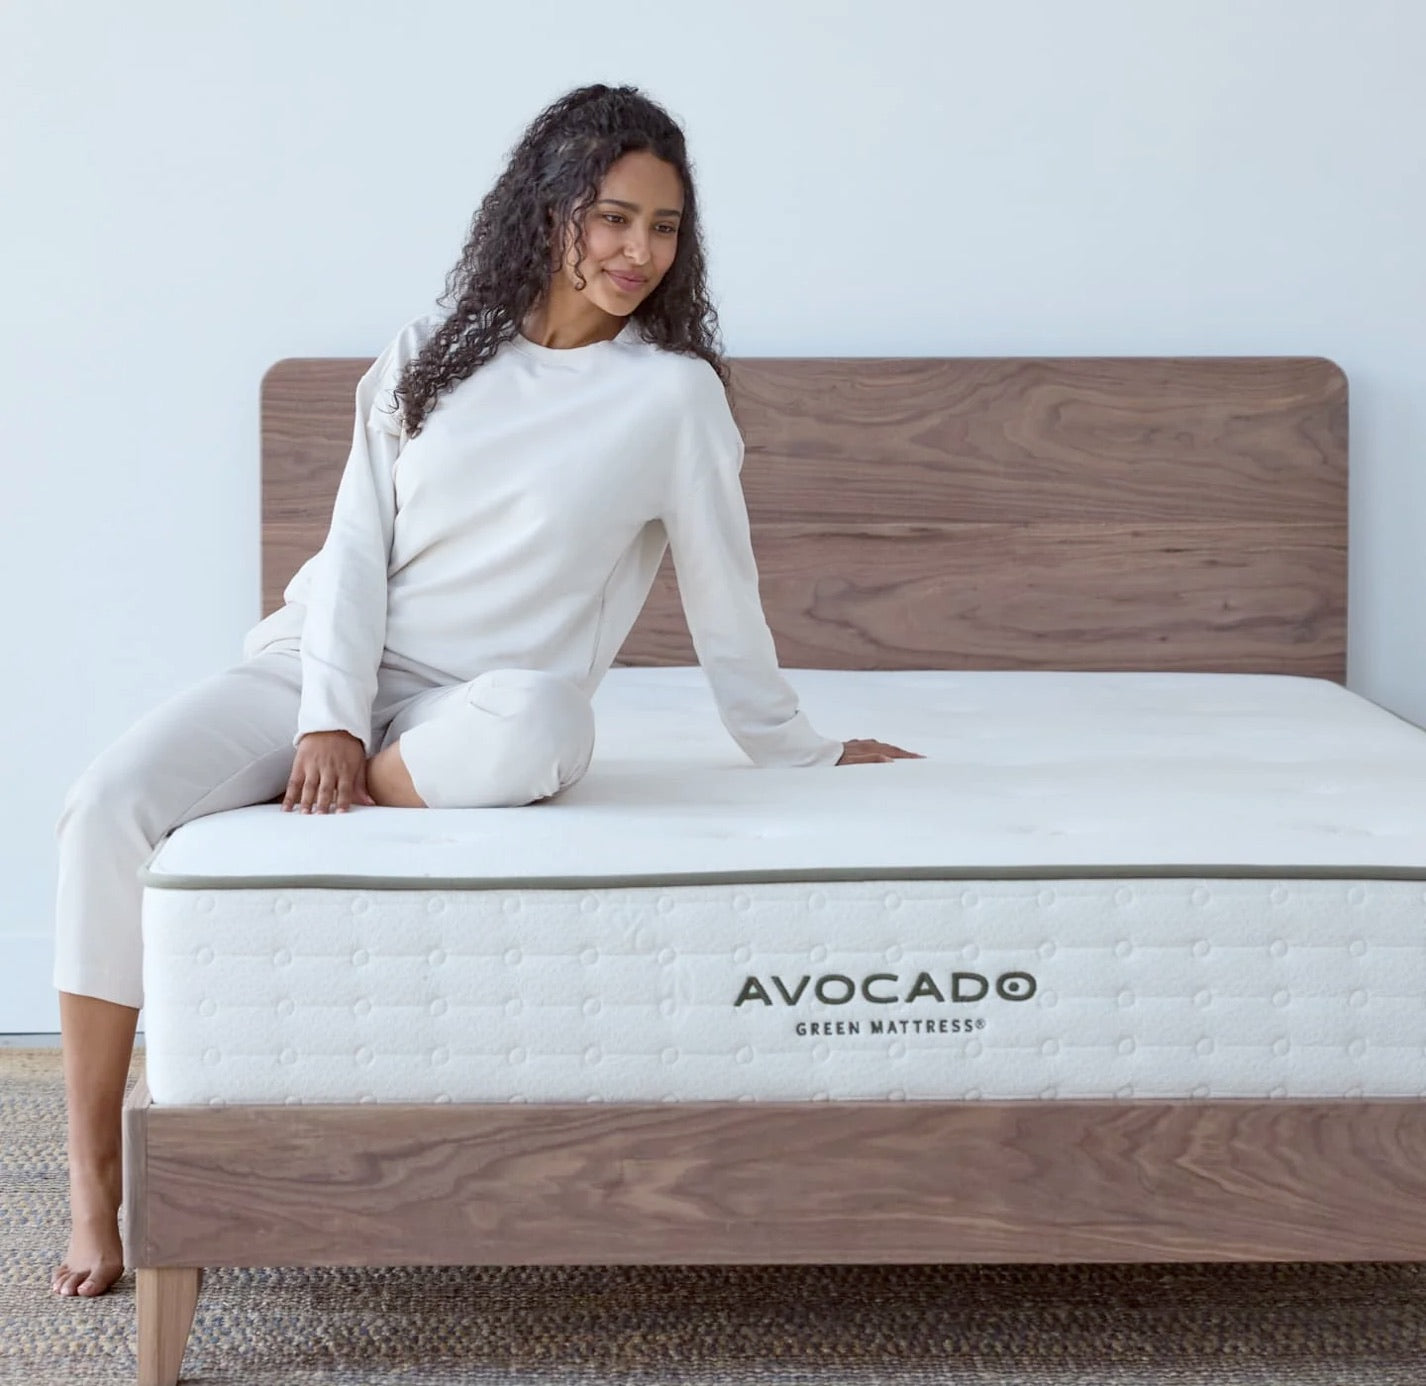 Avocado Mattress, woman sitting on bed